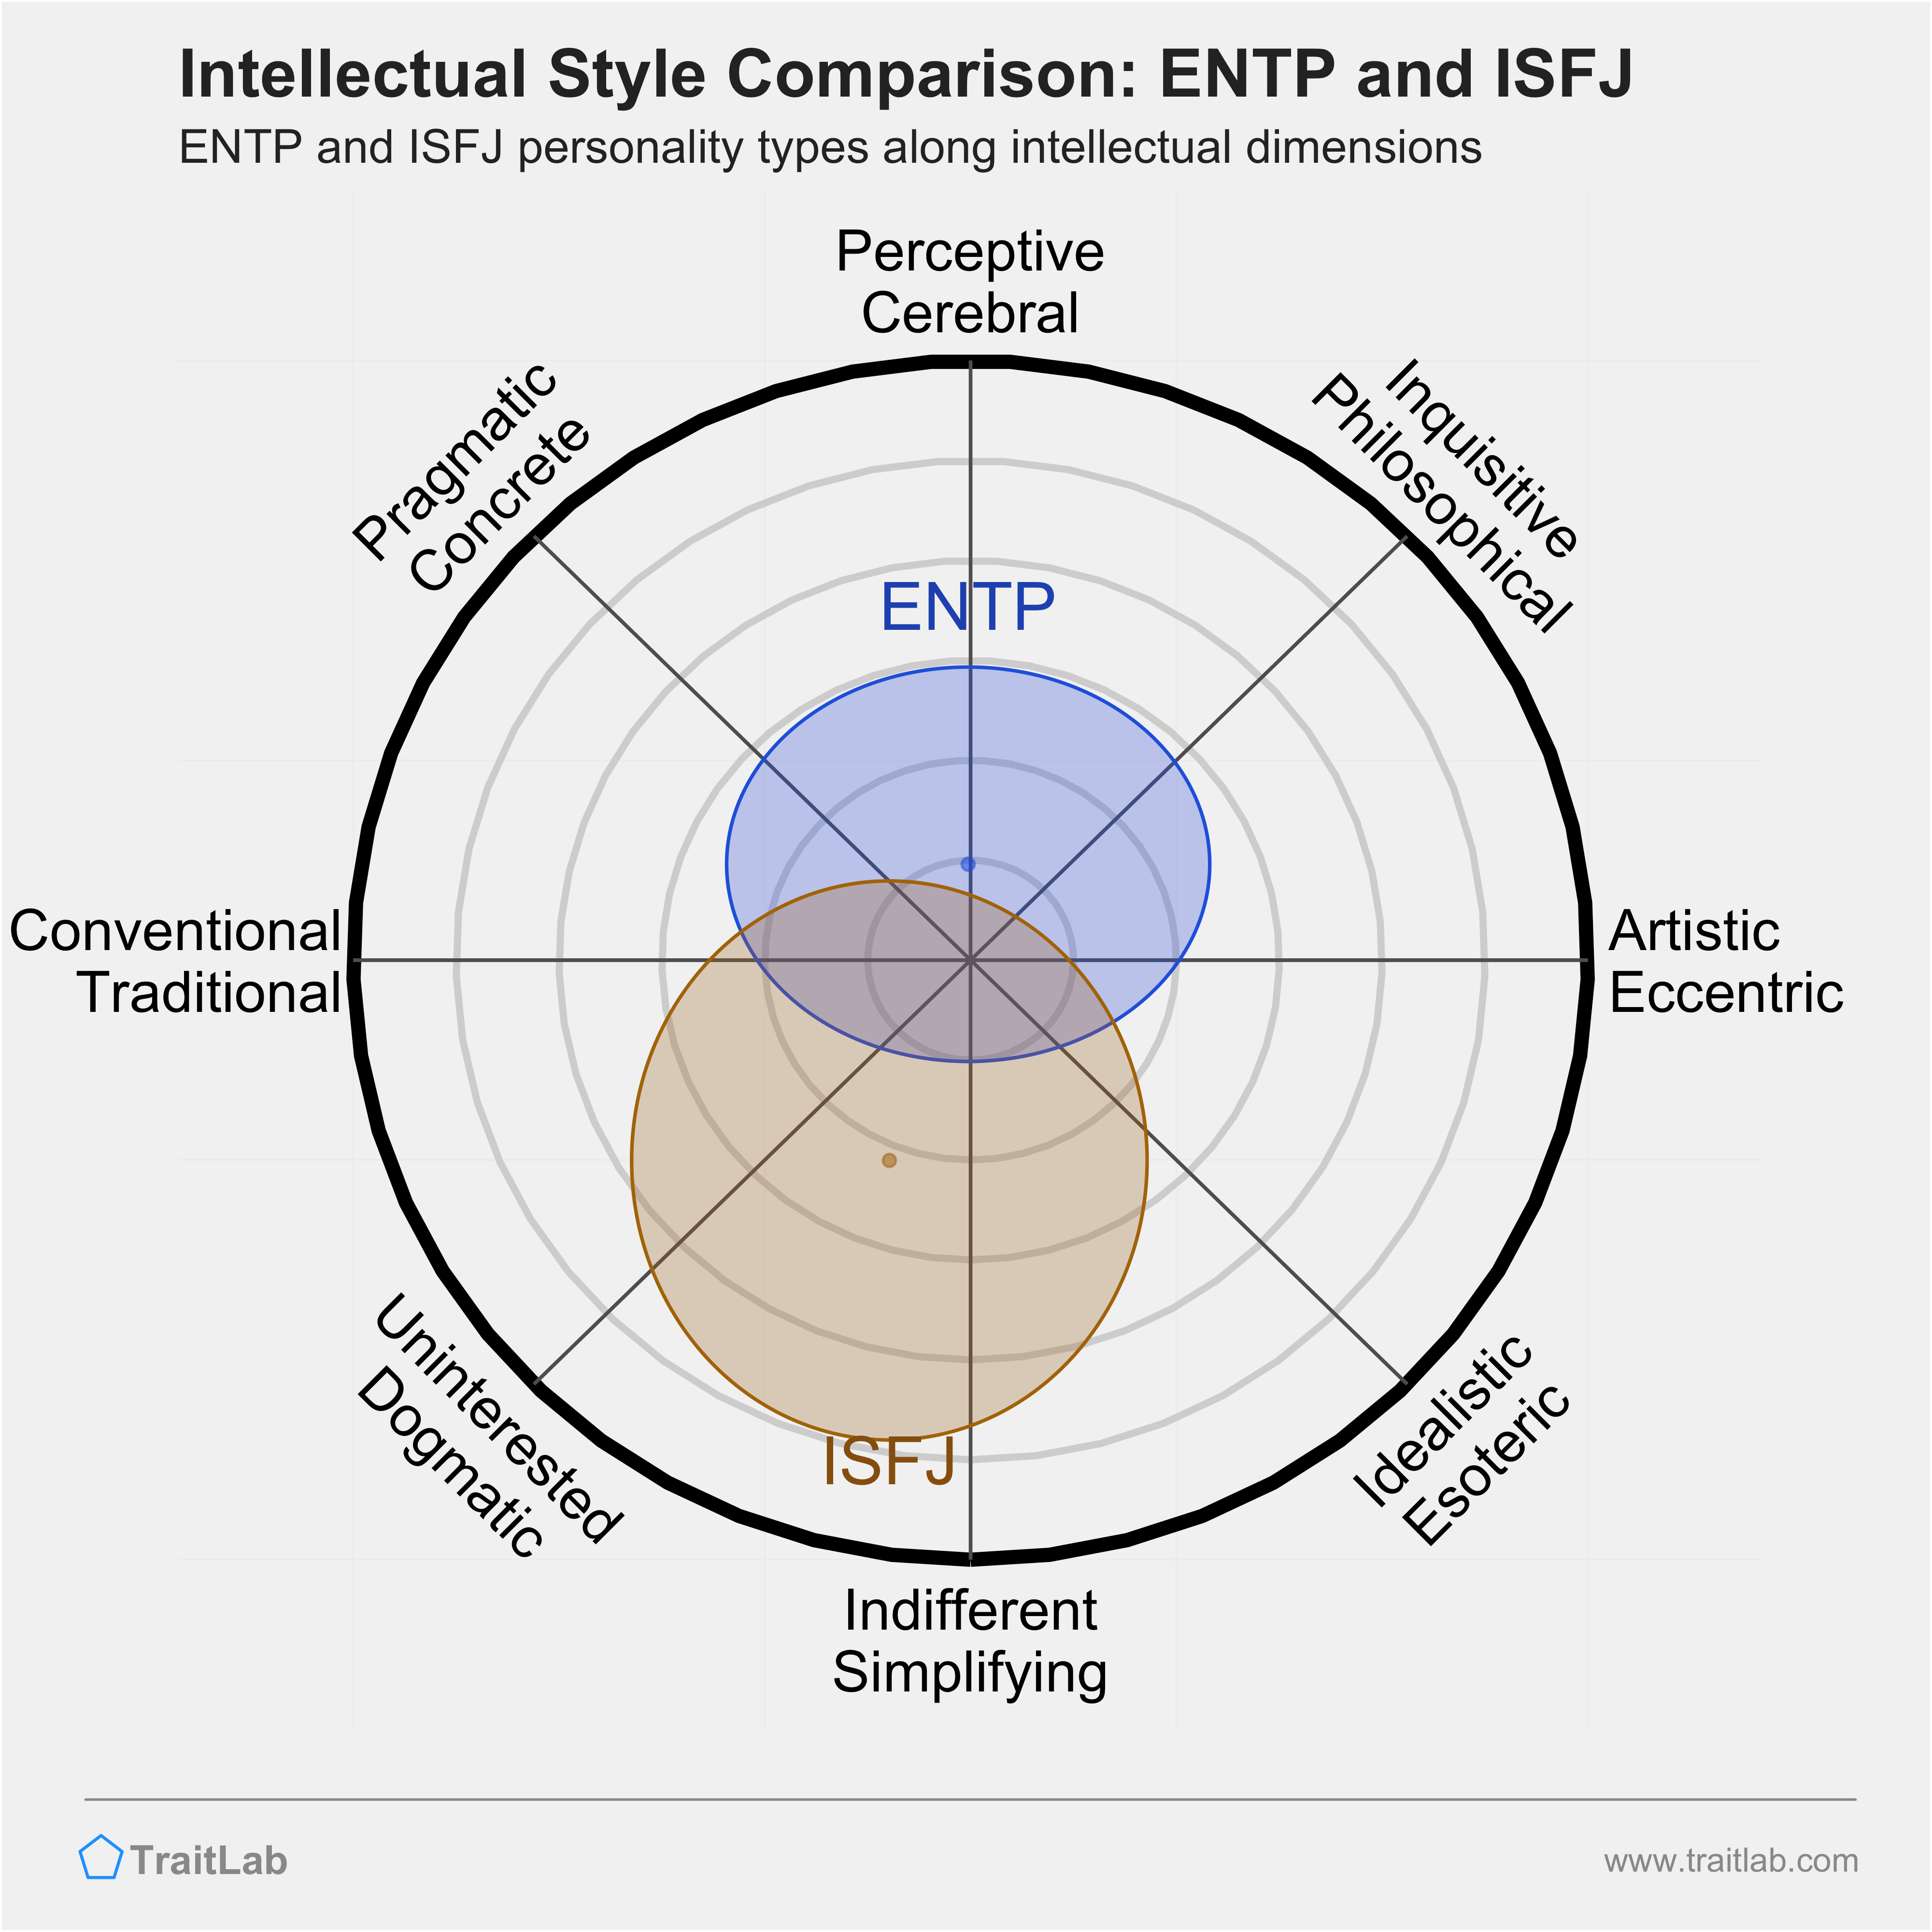 ENTP and ISFJ comparison across intellectual dimensions